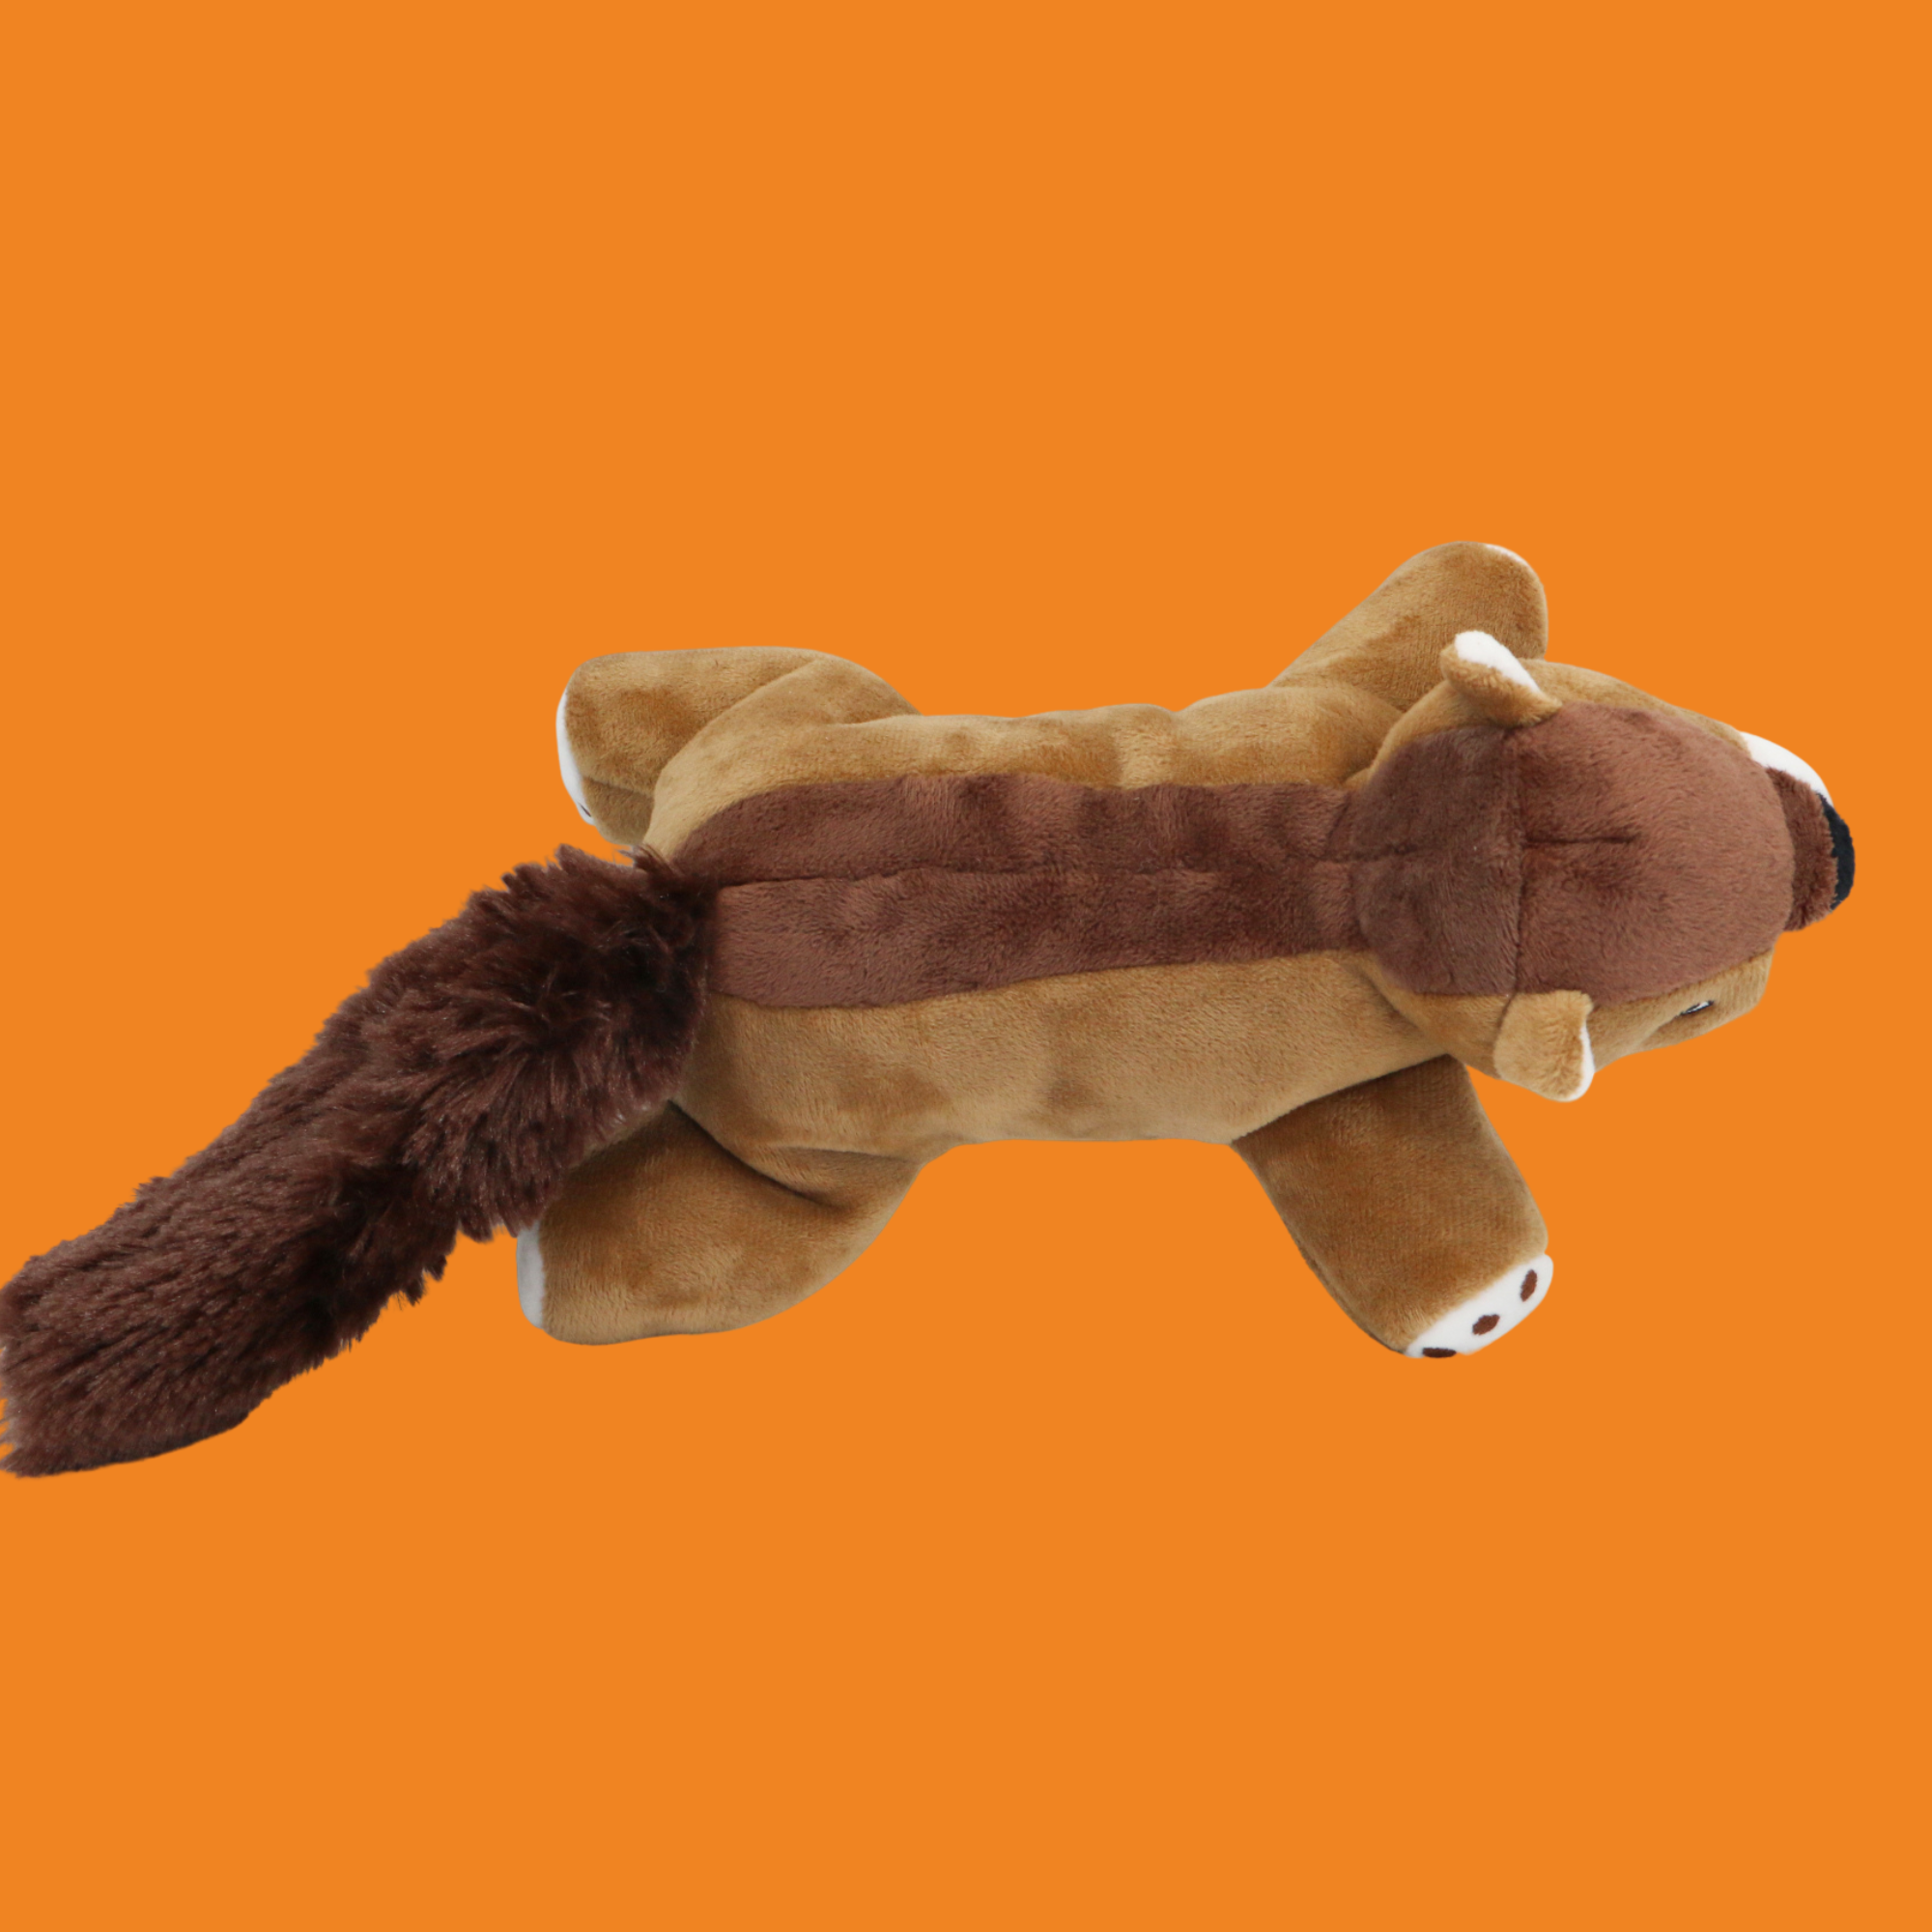 Gary - Surprised Squirrel - Stuffed Animal Dog Toy